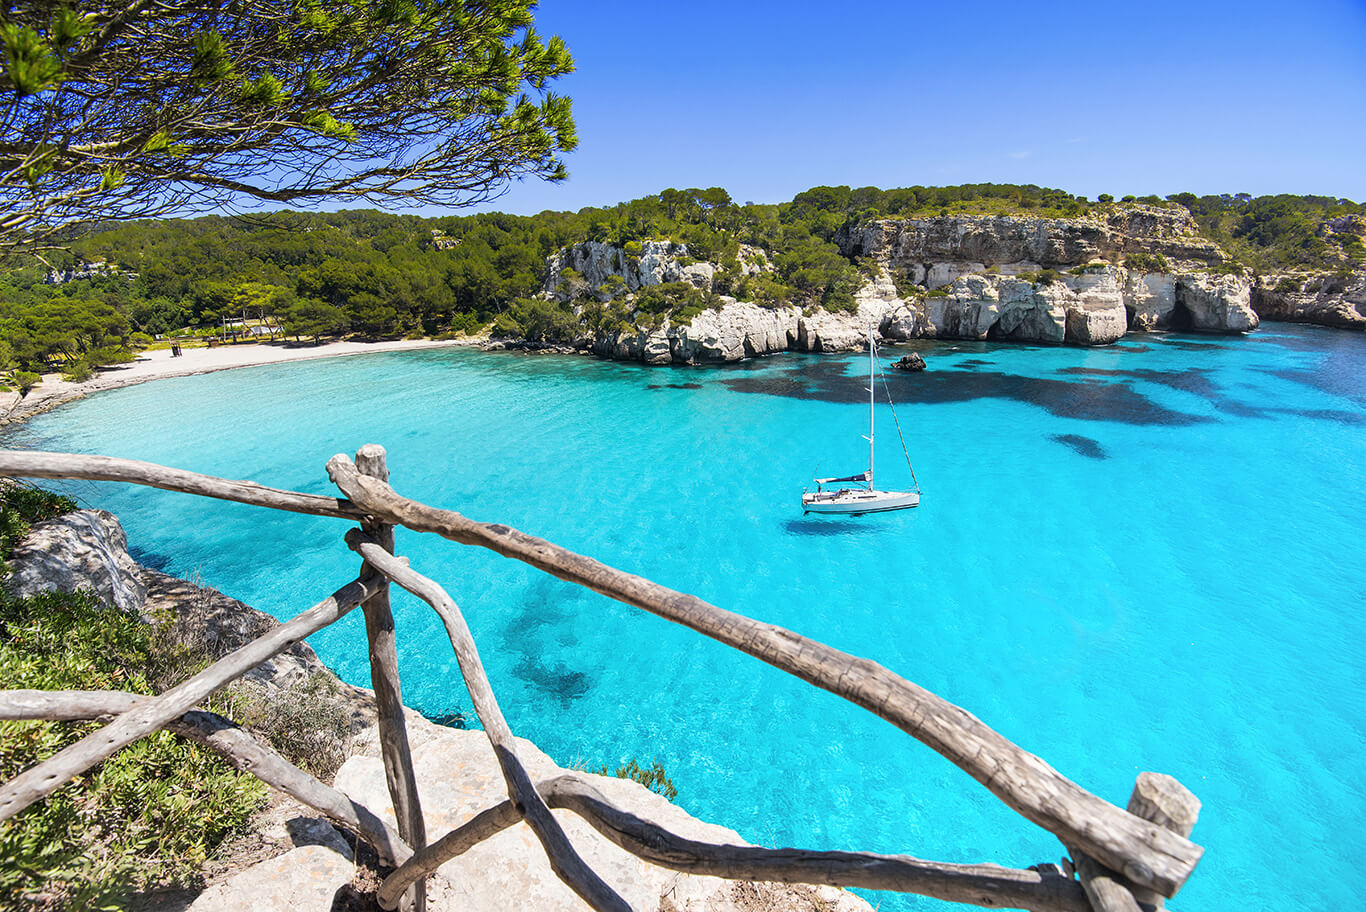 Mallorca Budgeturlaub